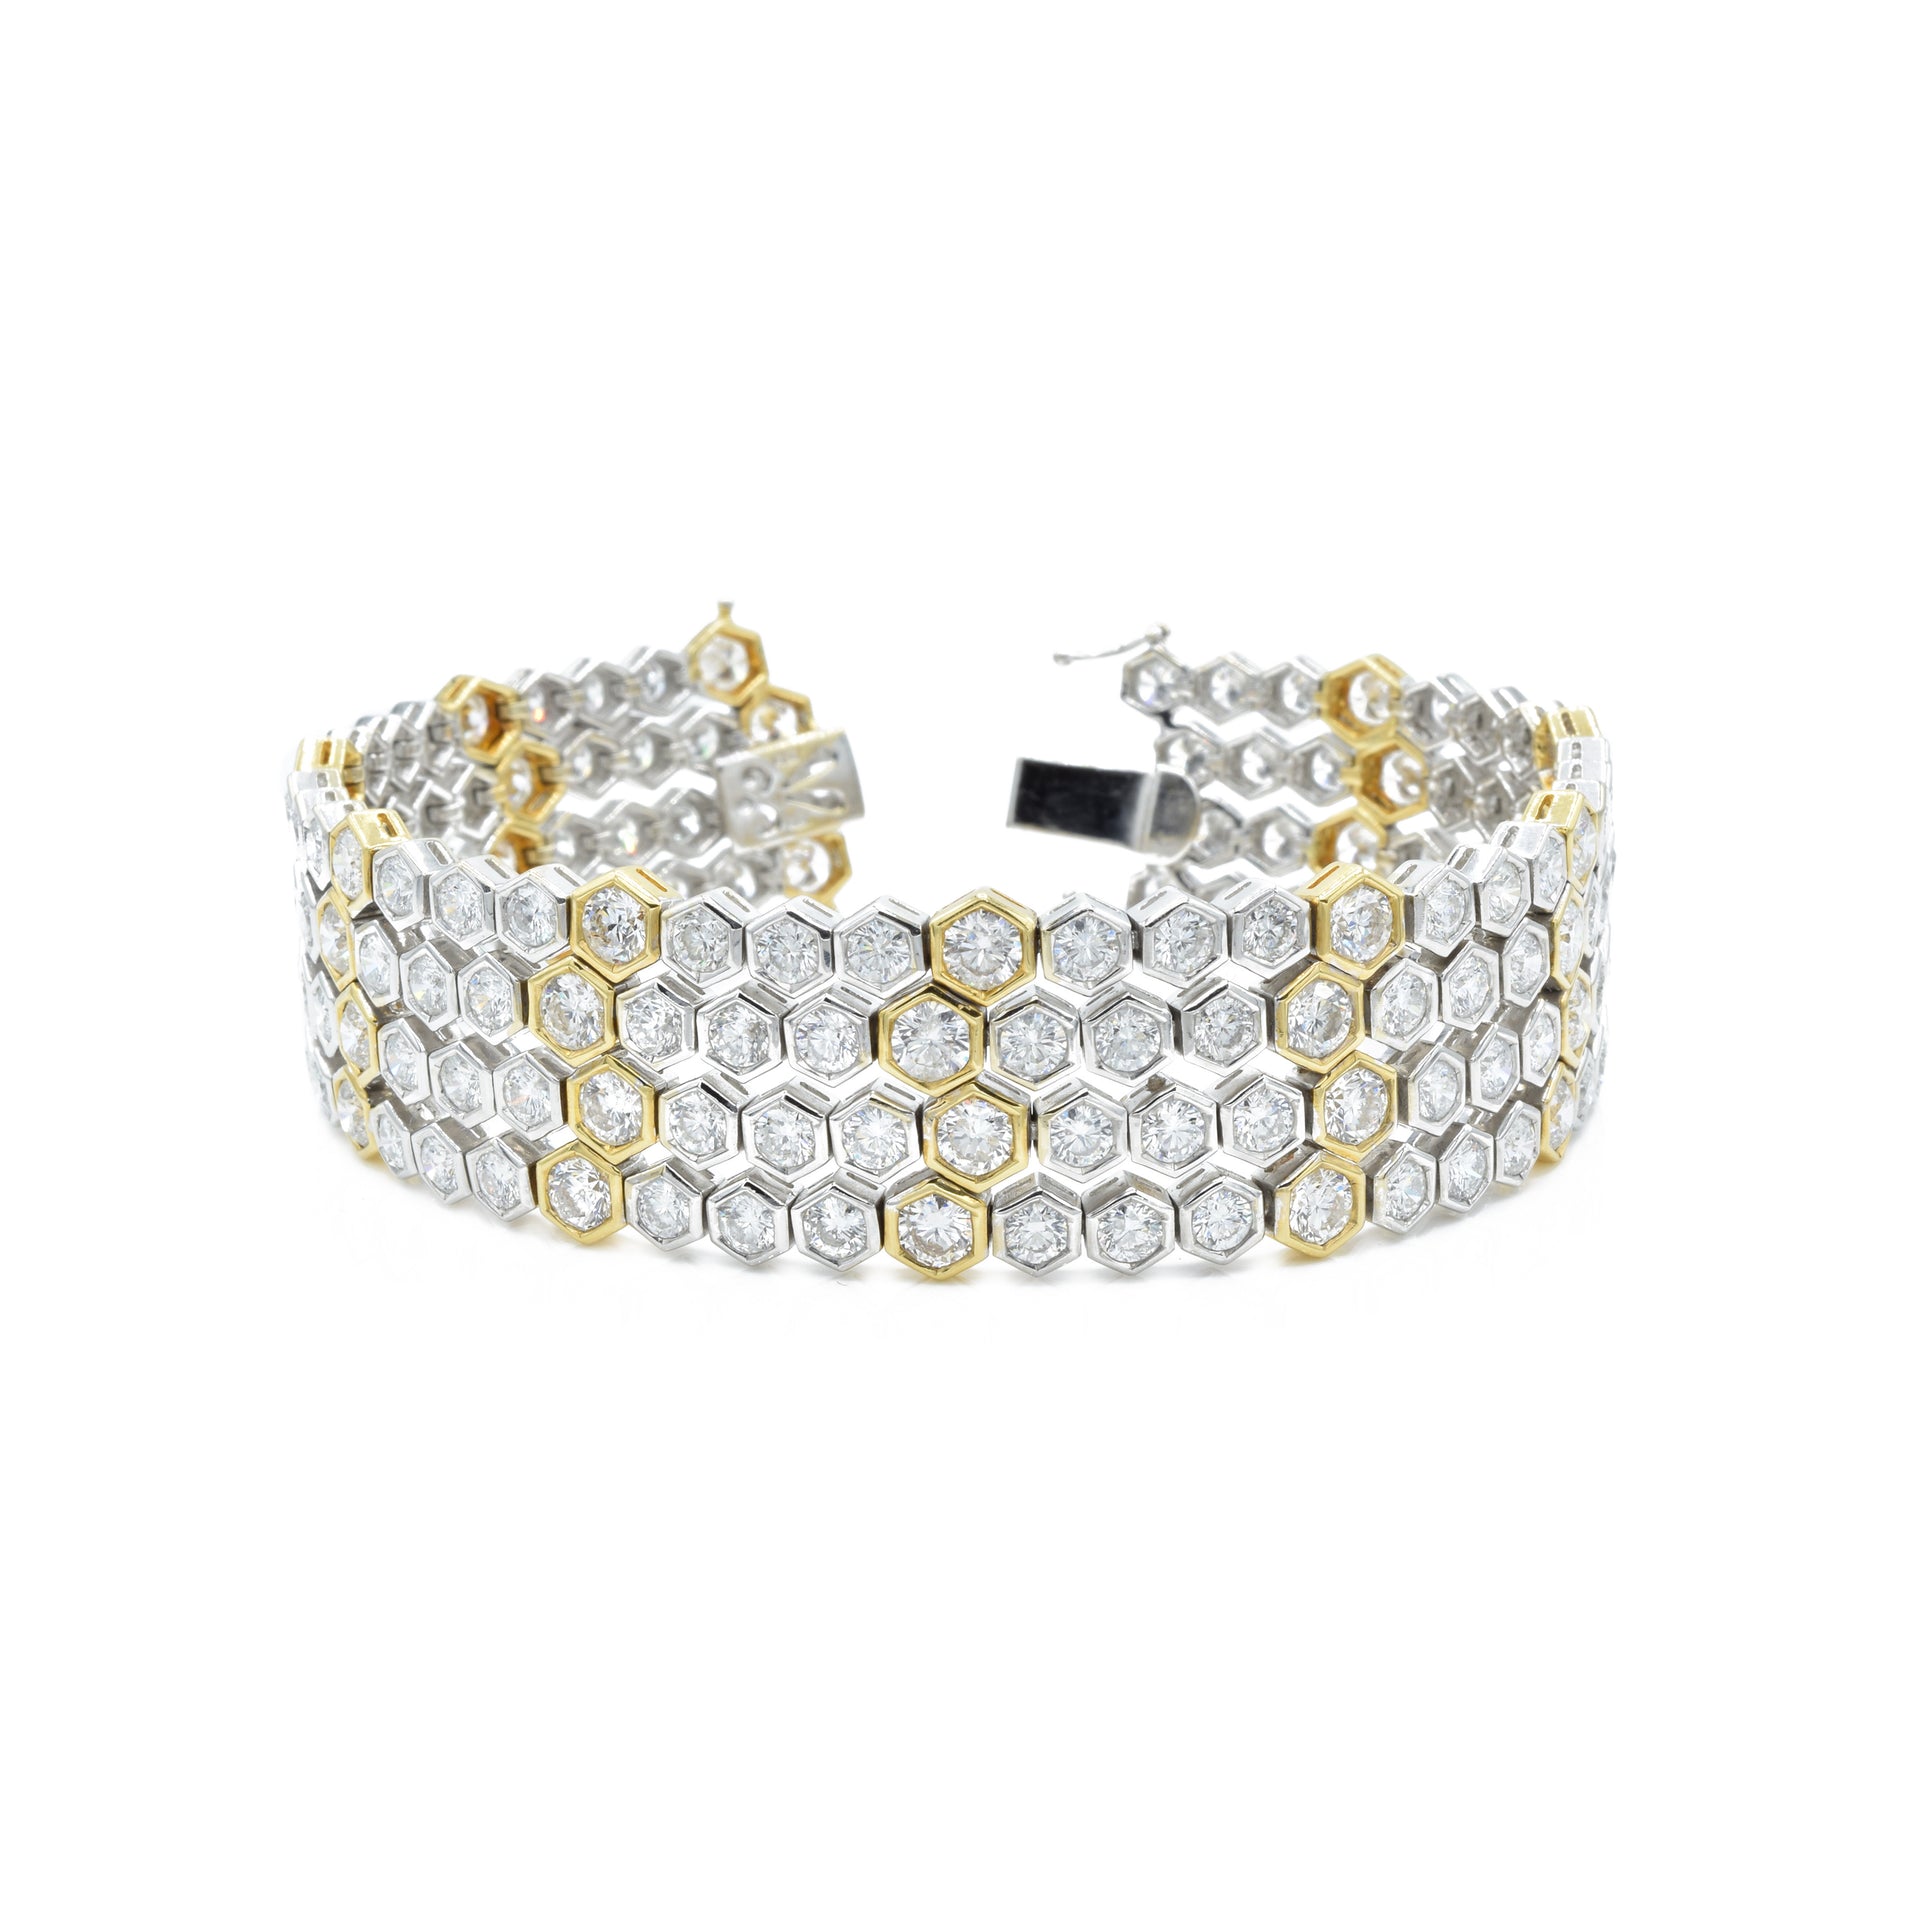 18kt Yellow and White Gold Diamond Bracelet